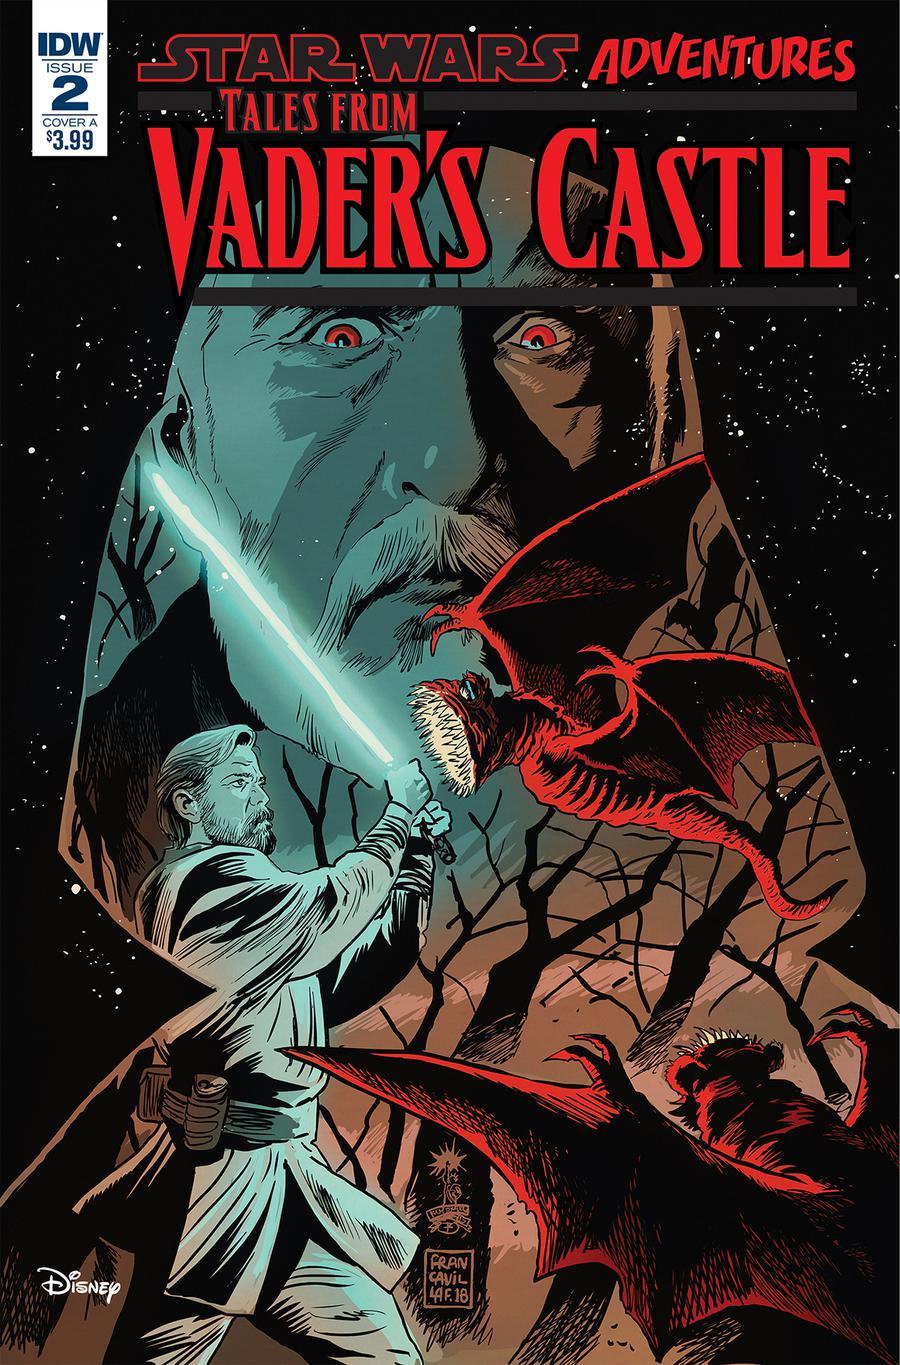 Star Wars Adventures Tales From Vaders Castle Vol. 1 #2